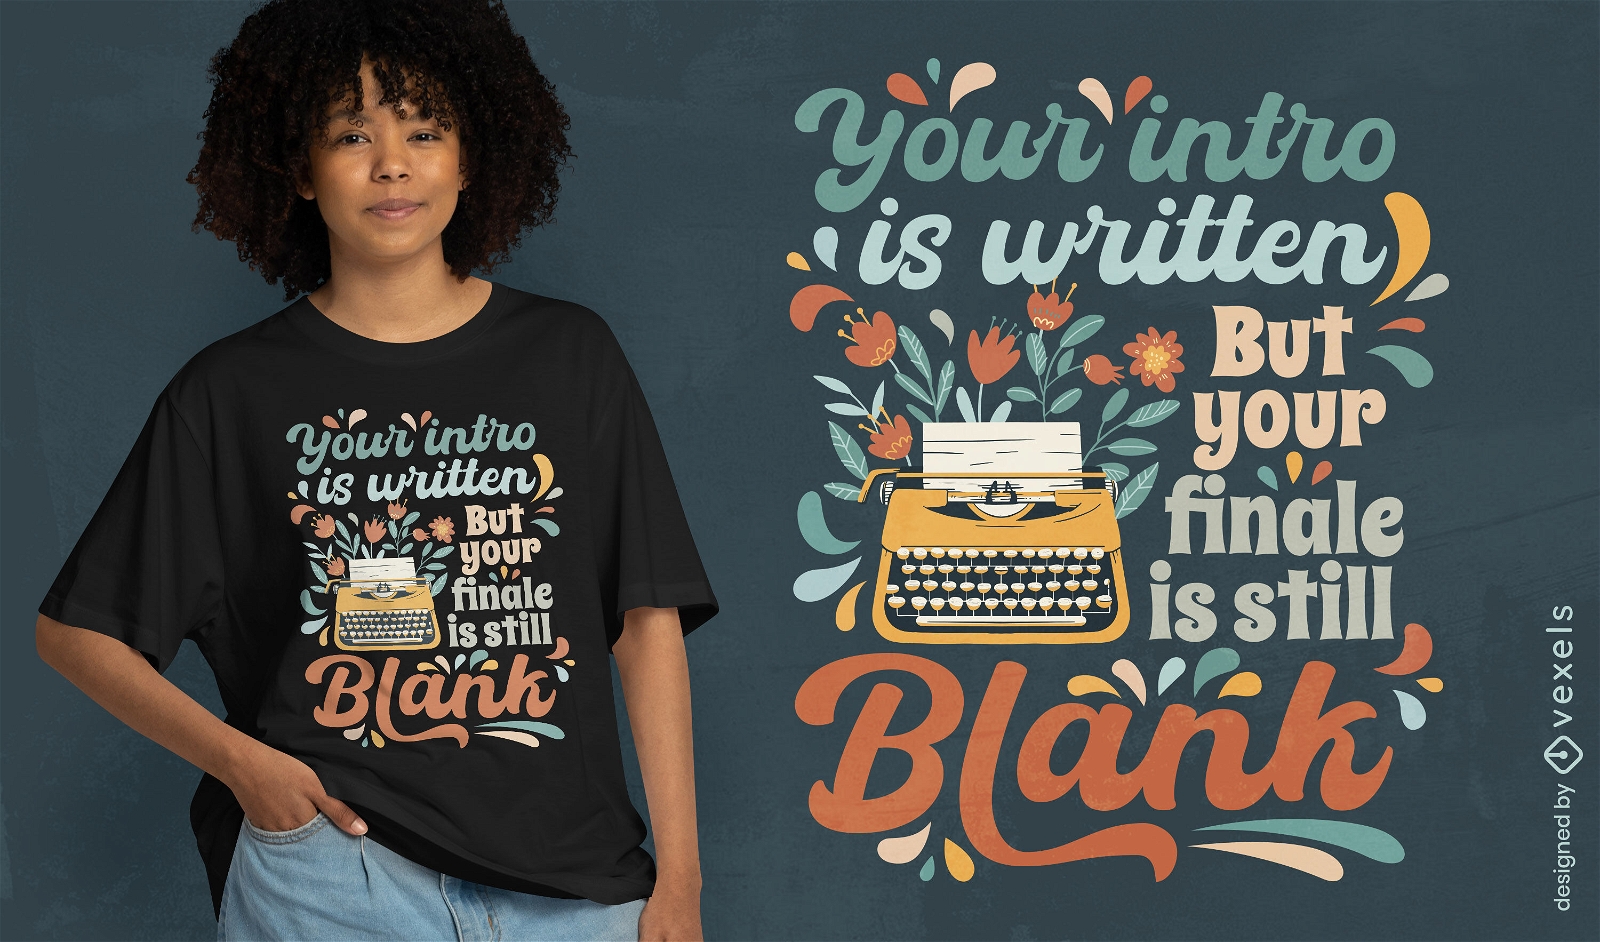 Typewriter and flowers t-shirt design